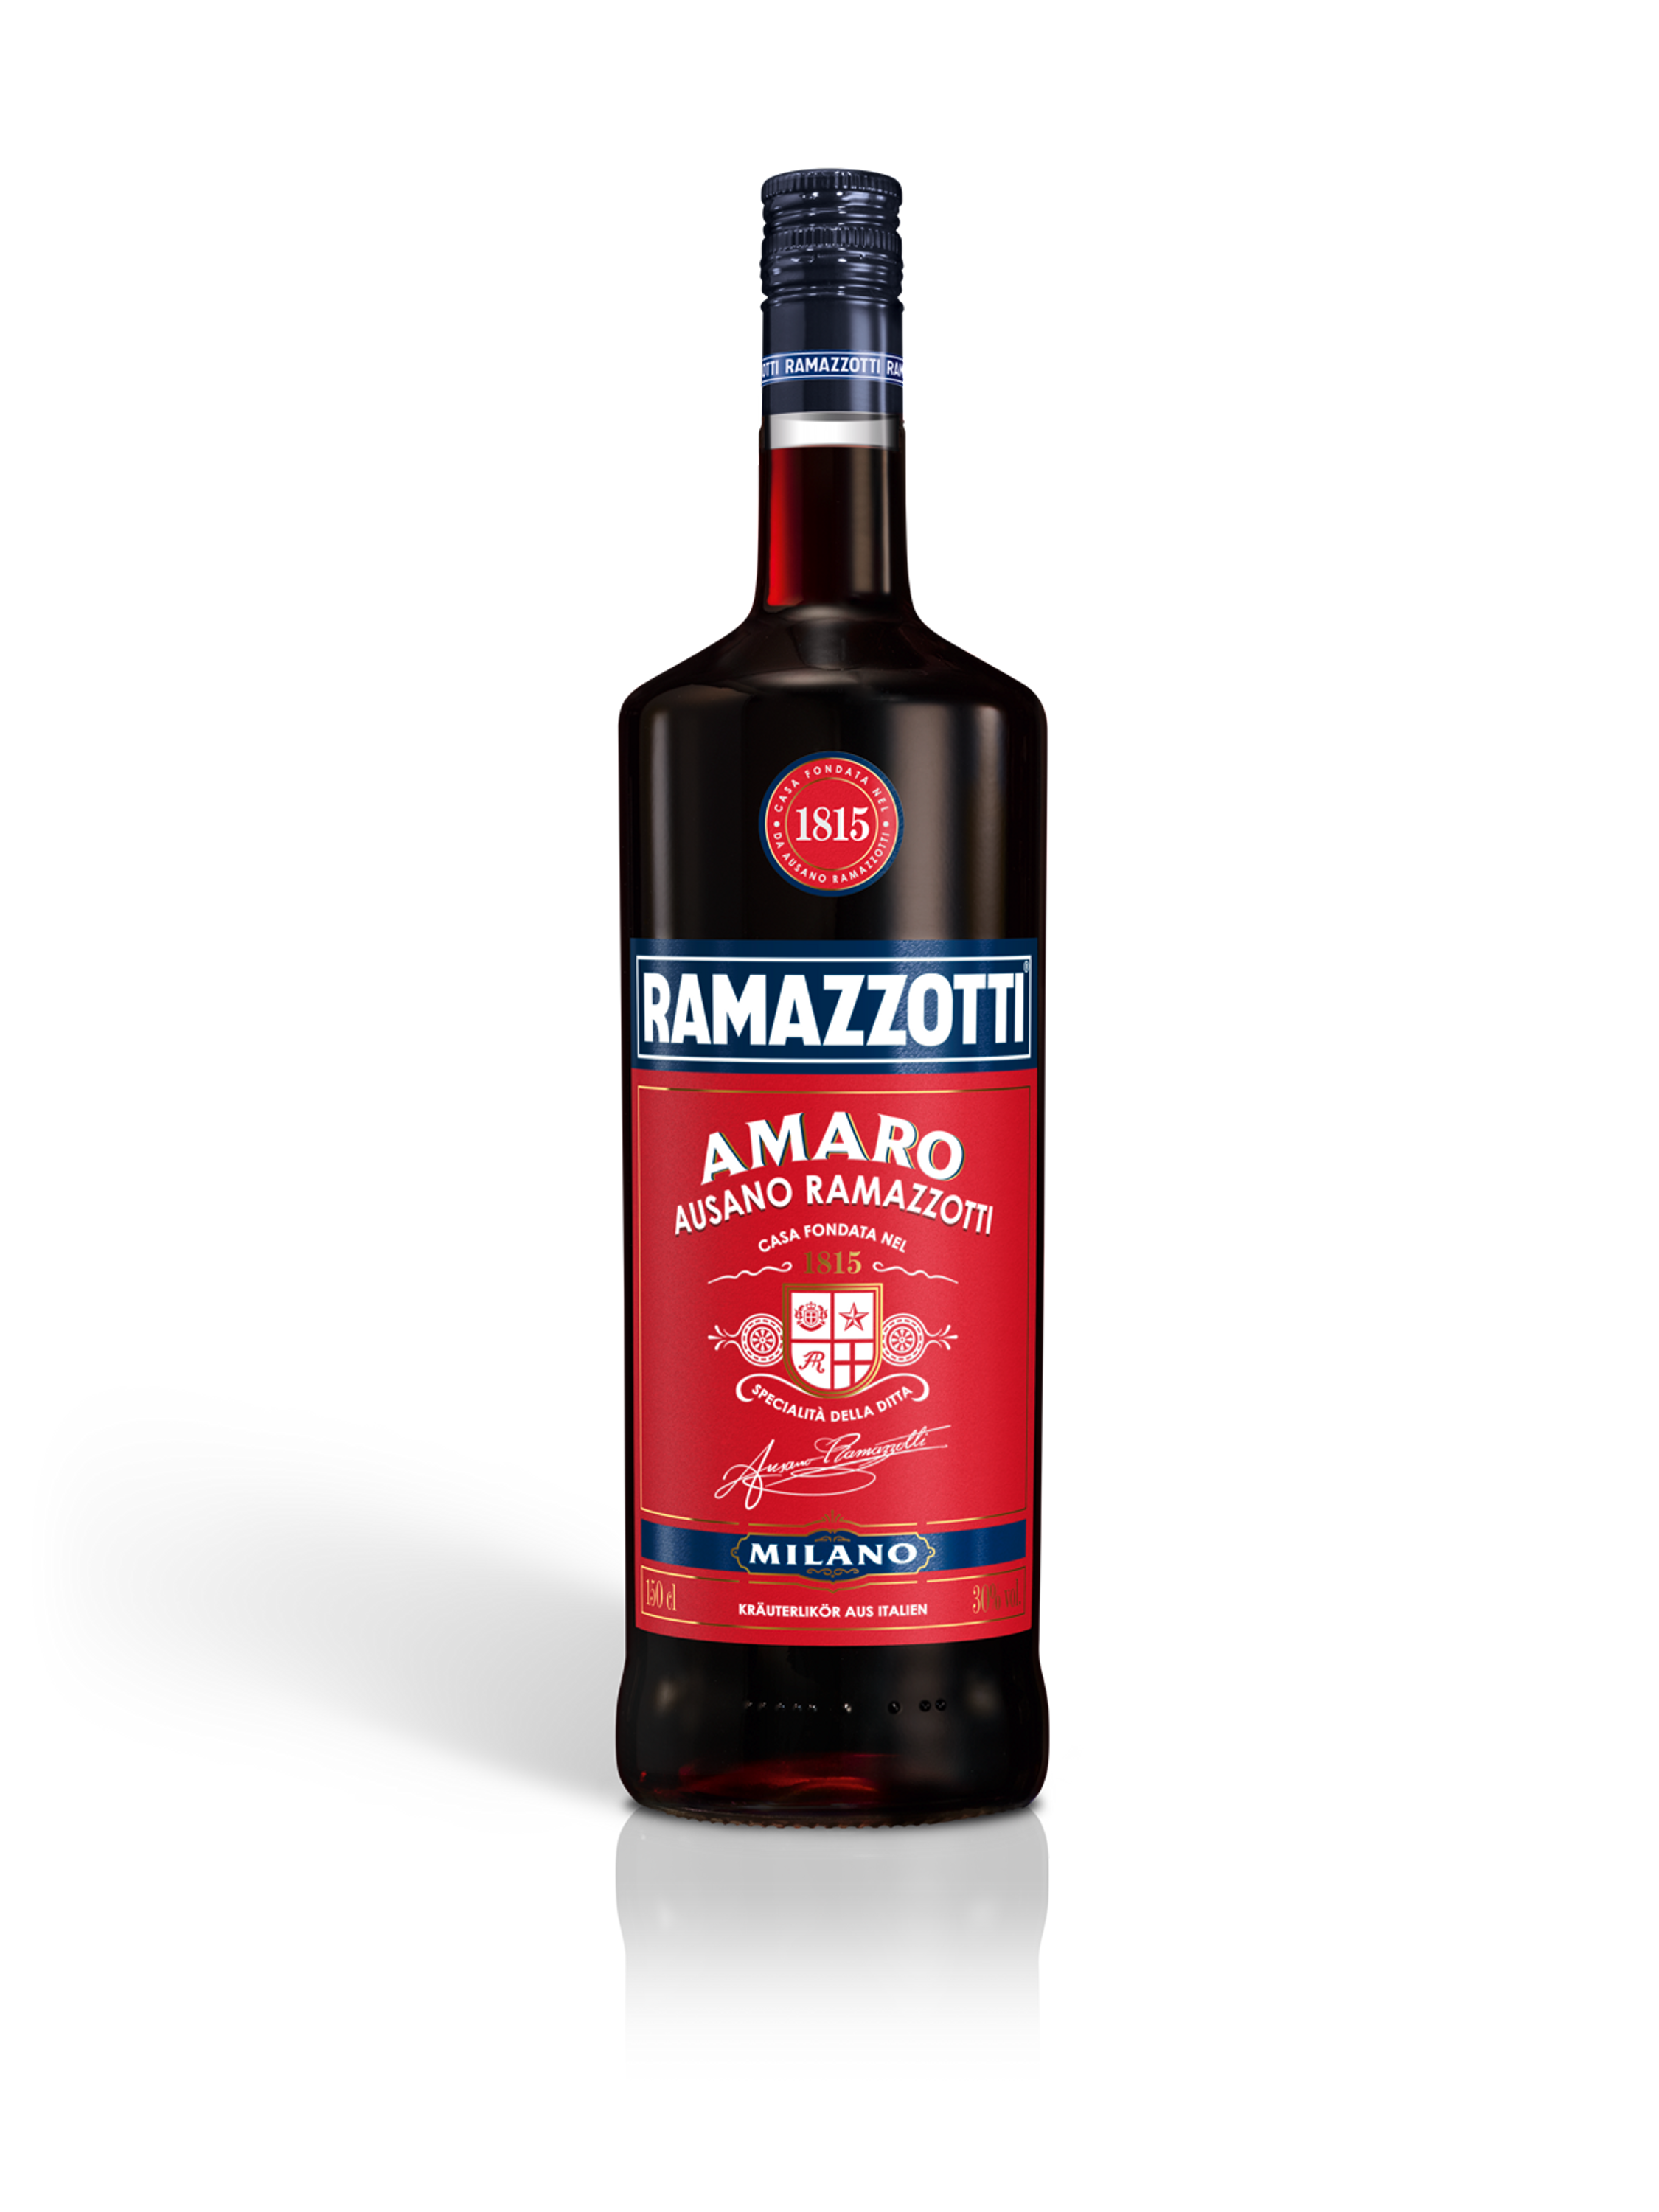 Ramazzotti Amaro 1.5l, alc. 30% by volume, herbal liqueur Italy 